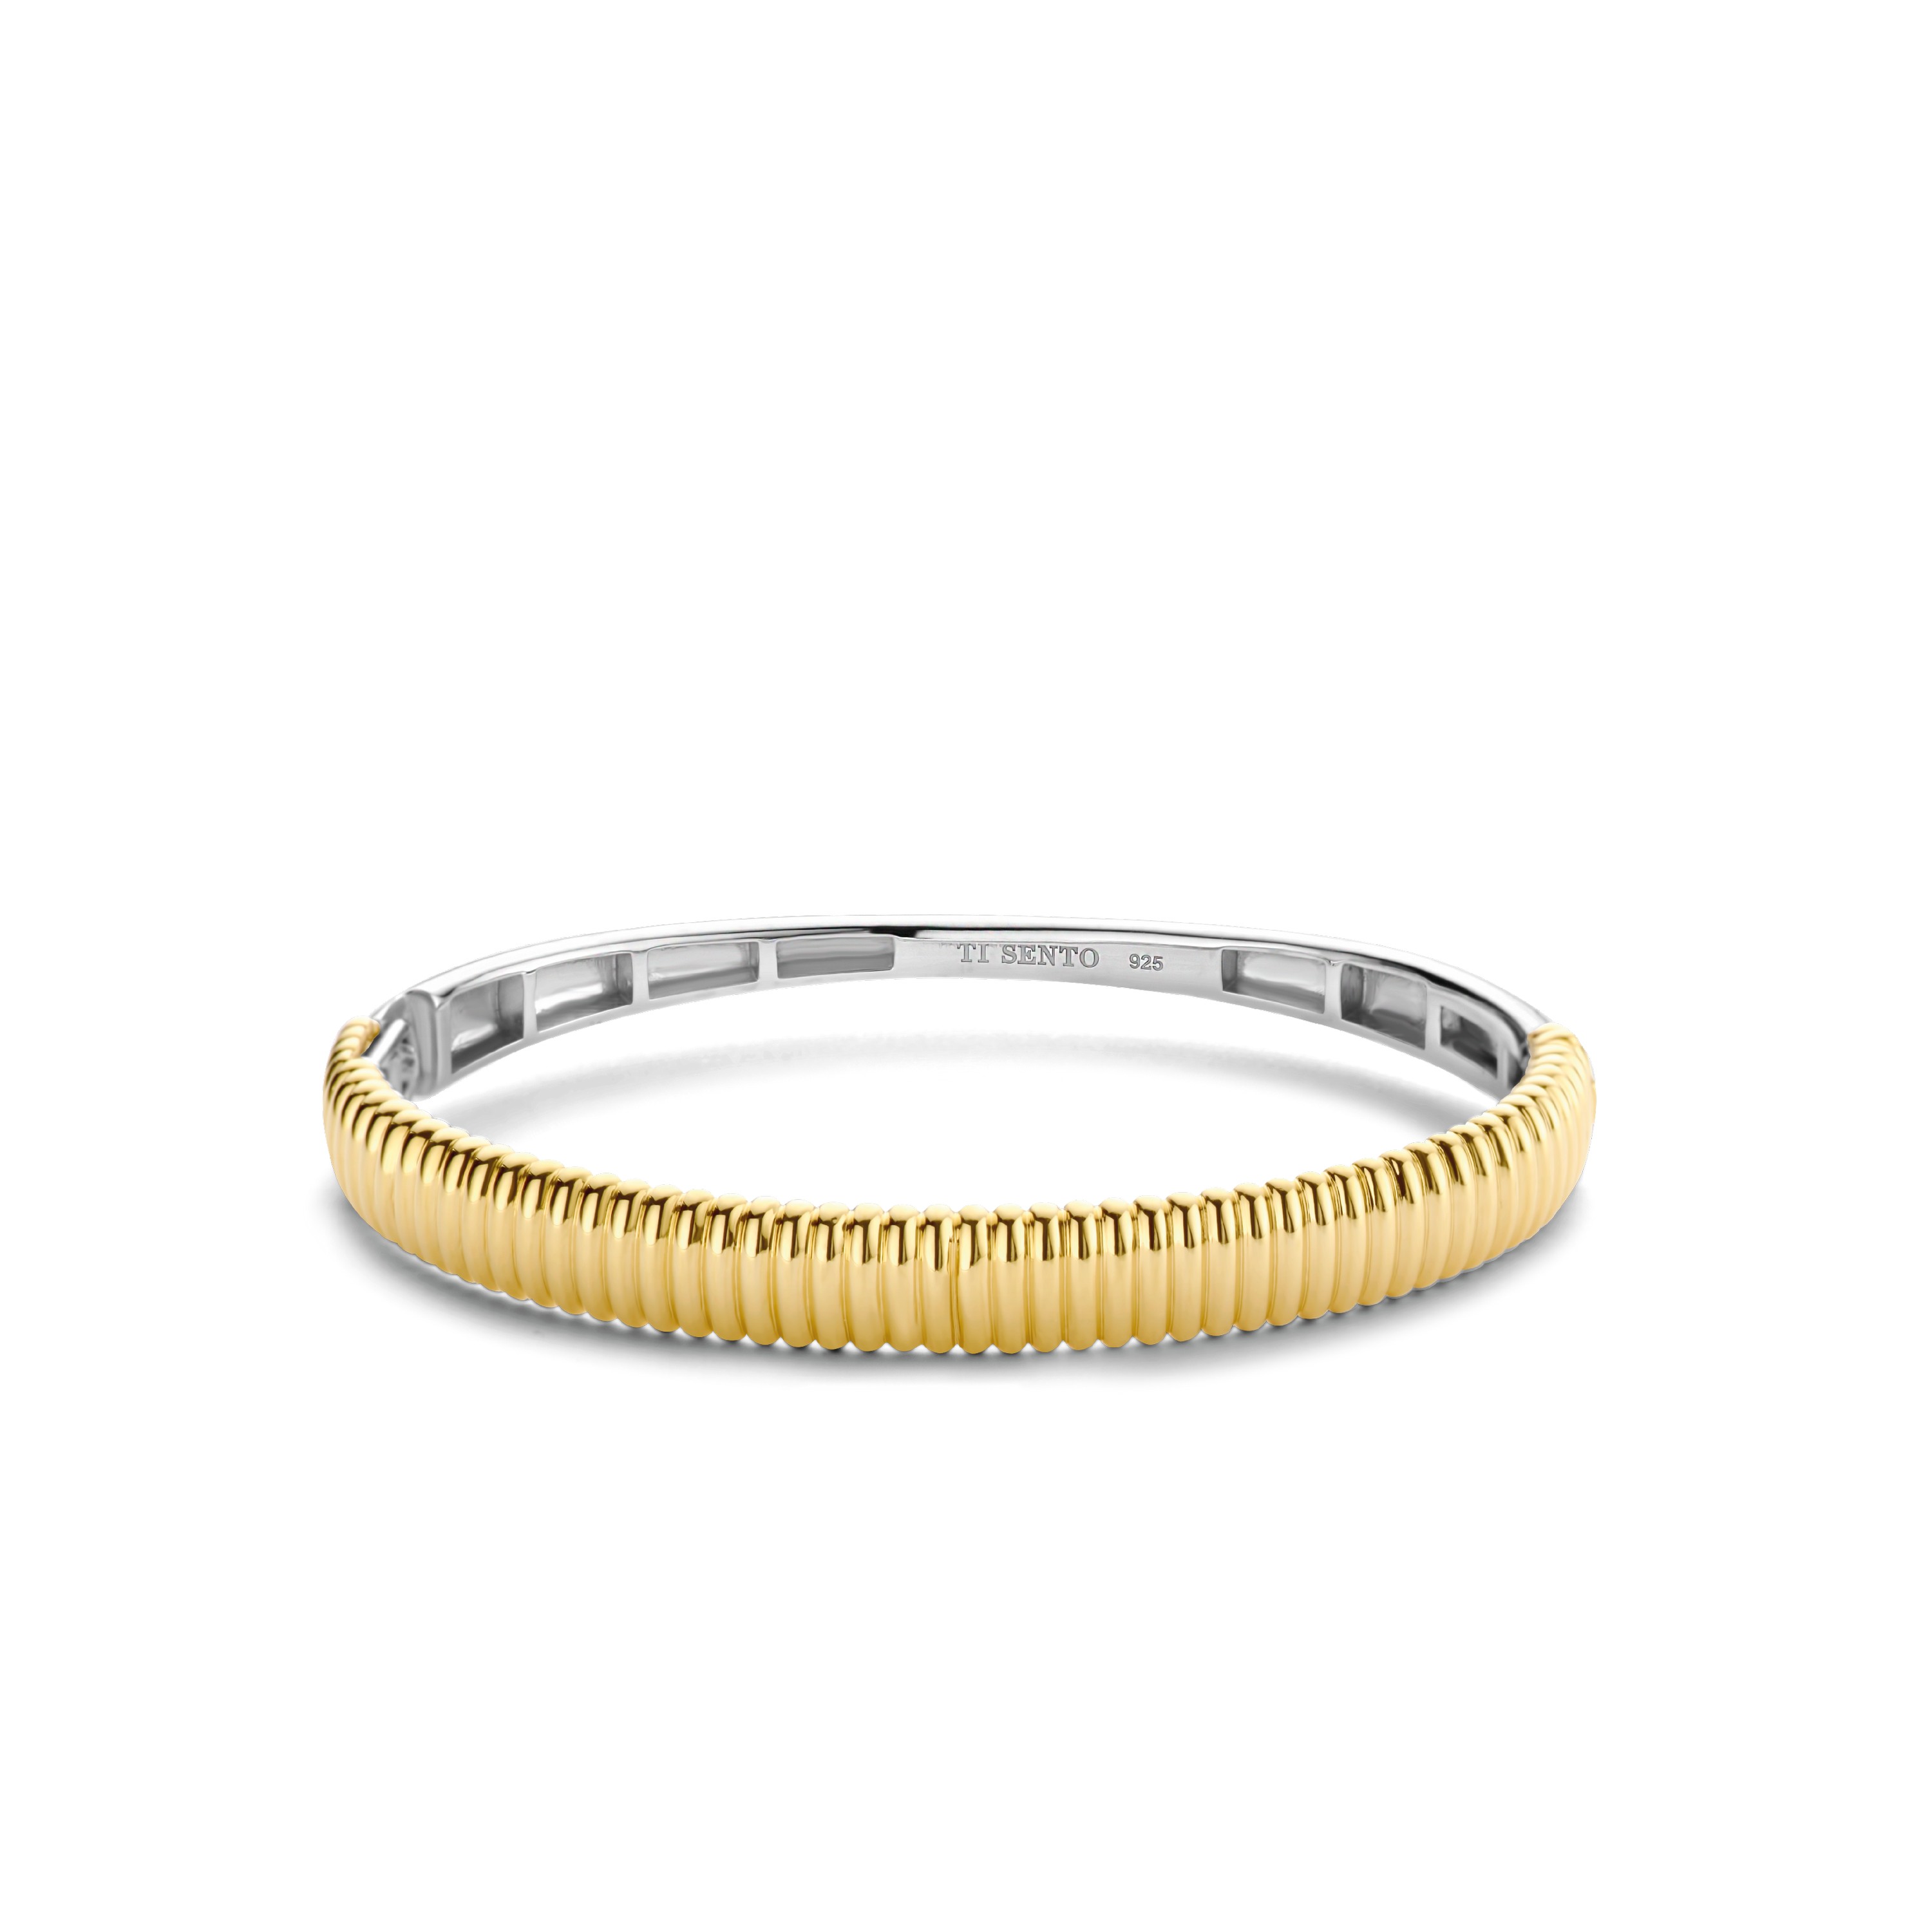 TI SENTO - Milano Bracelet 2957SY Gala Jewelers Inc. White Oak, PA